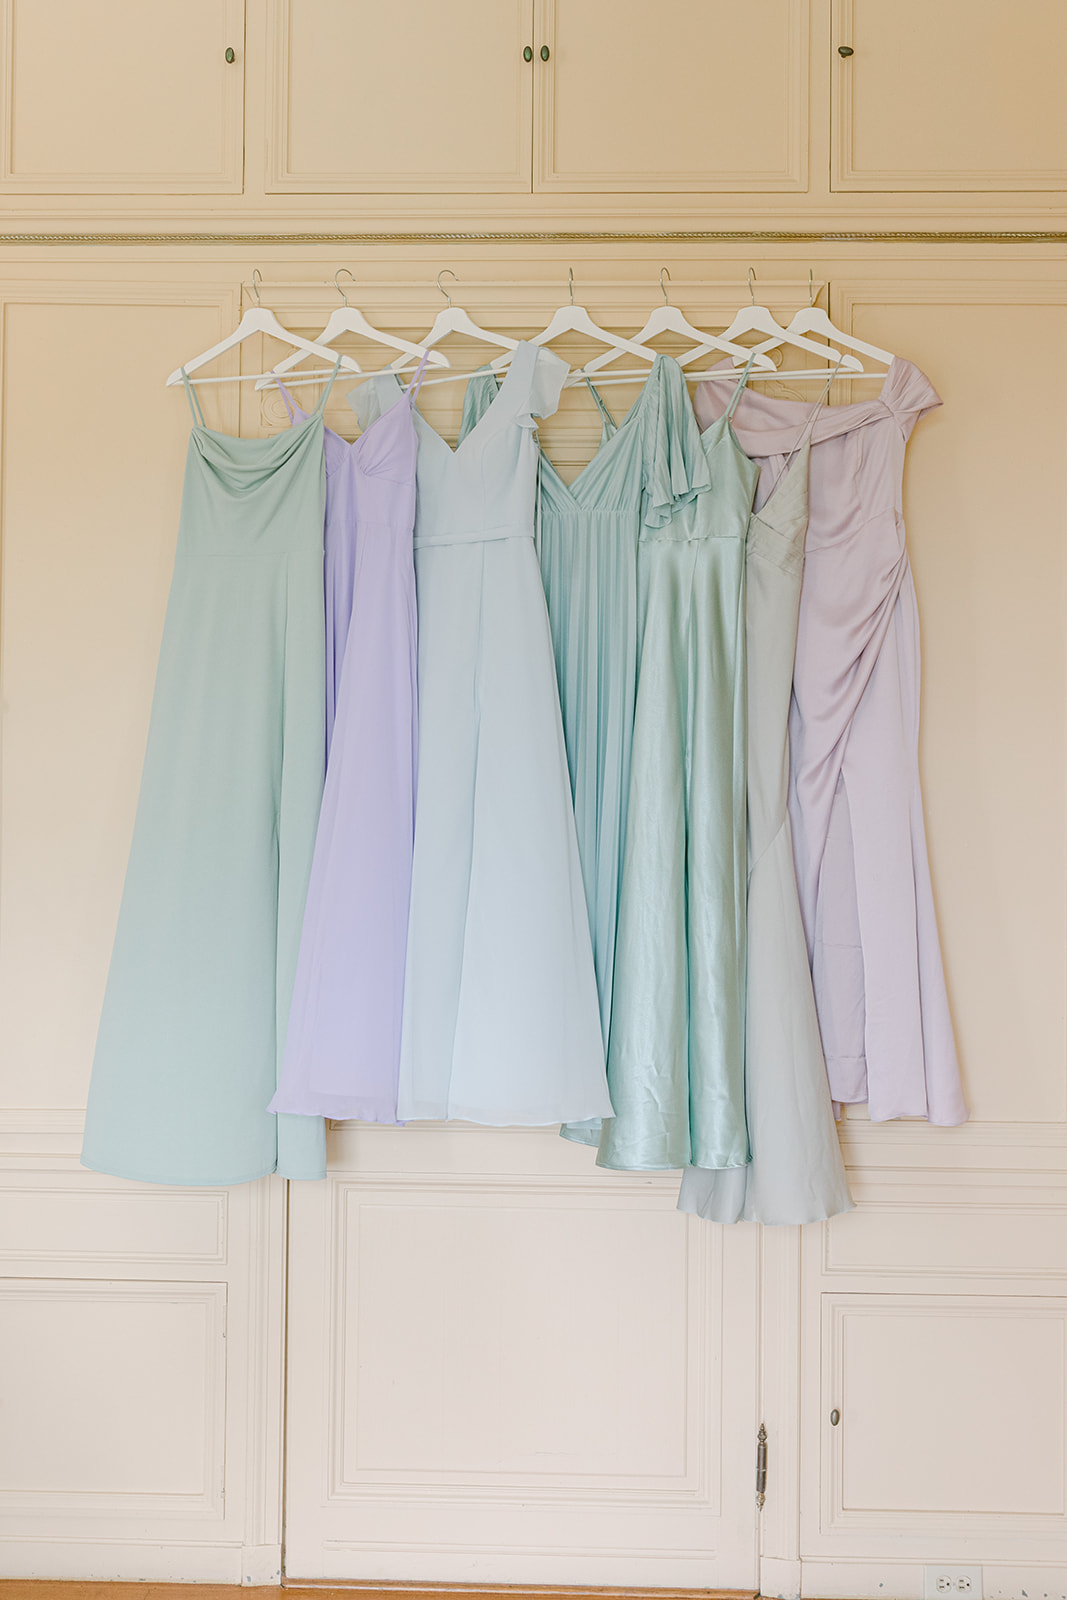 dresses hanging up at glen manor house